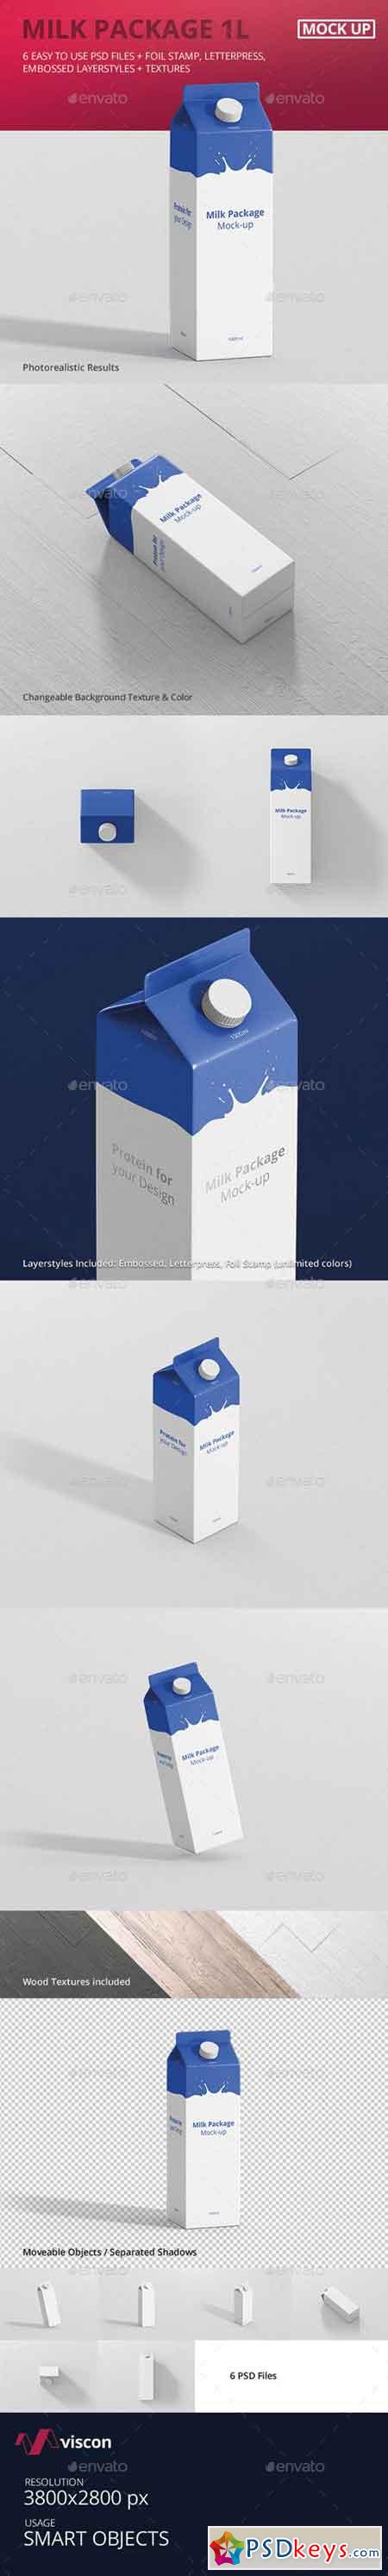 Juice Milk Mockup - 1L Carton Box 18160970